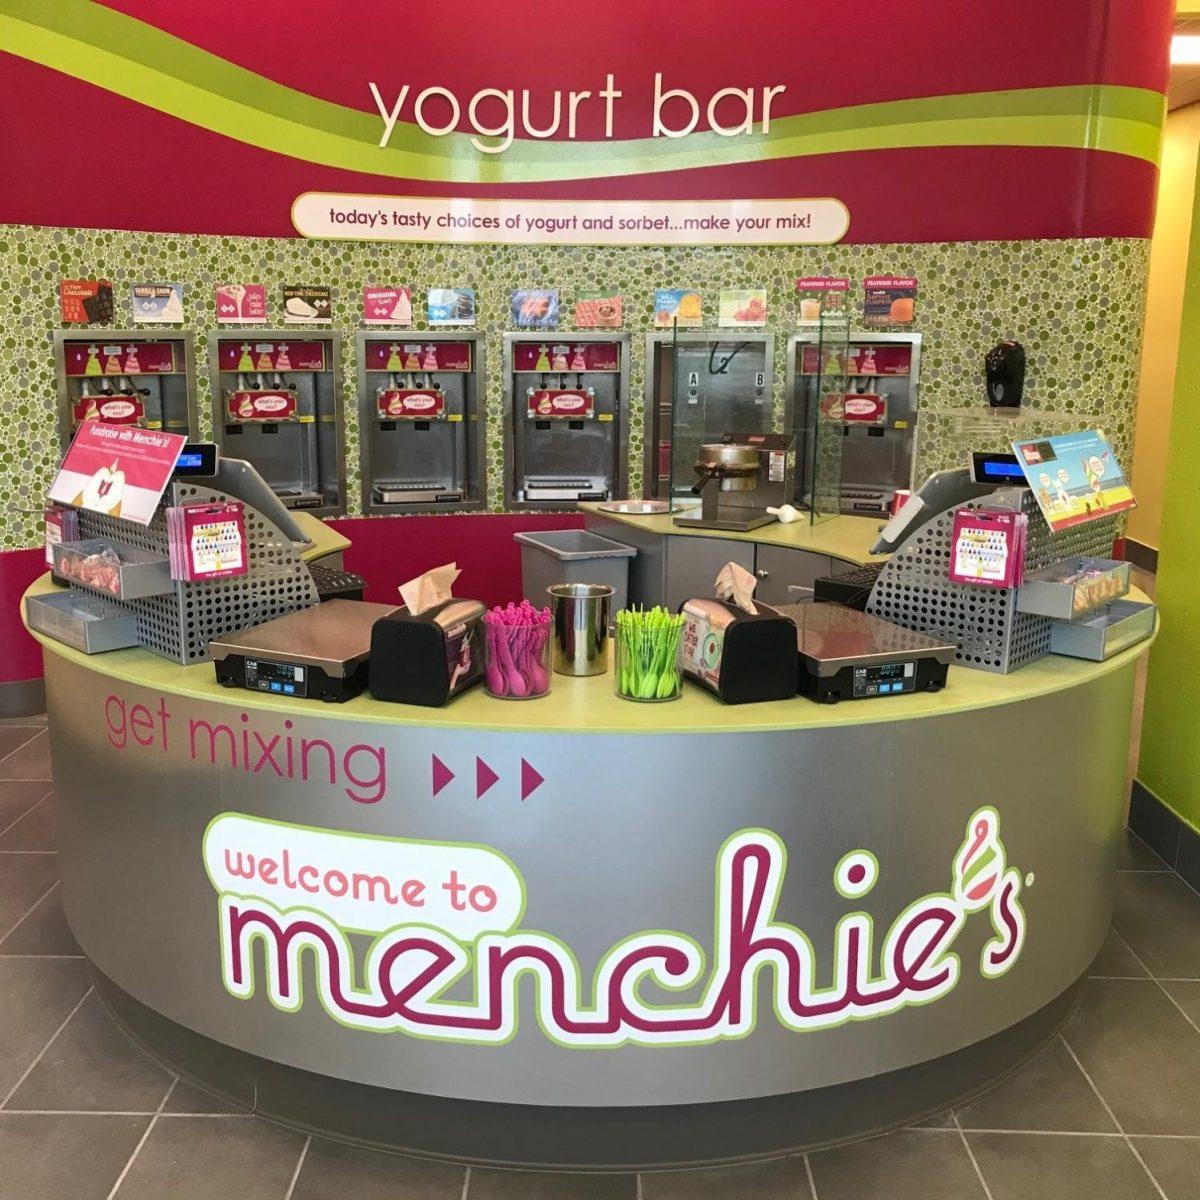 Inside the Menchie’s Frozen Yogurt store.